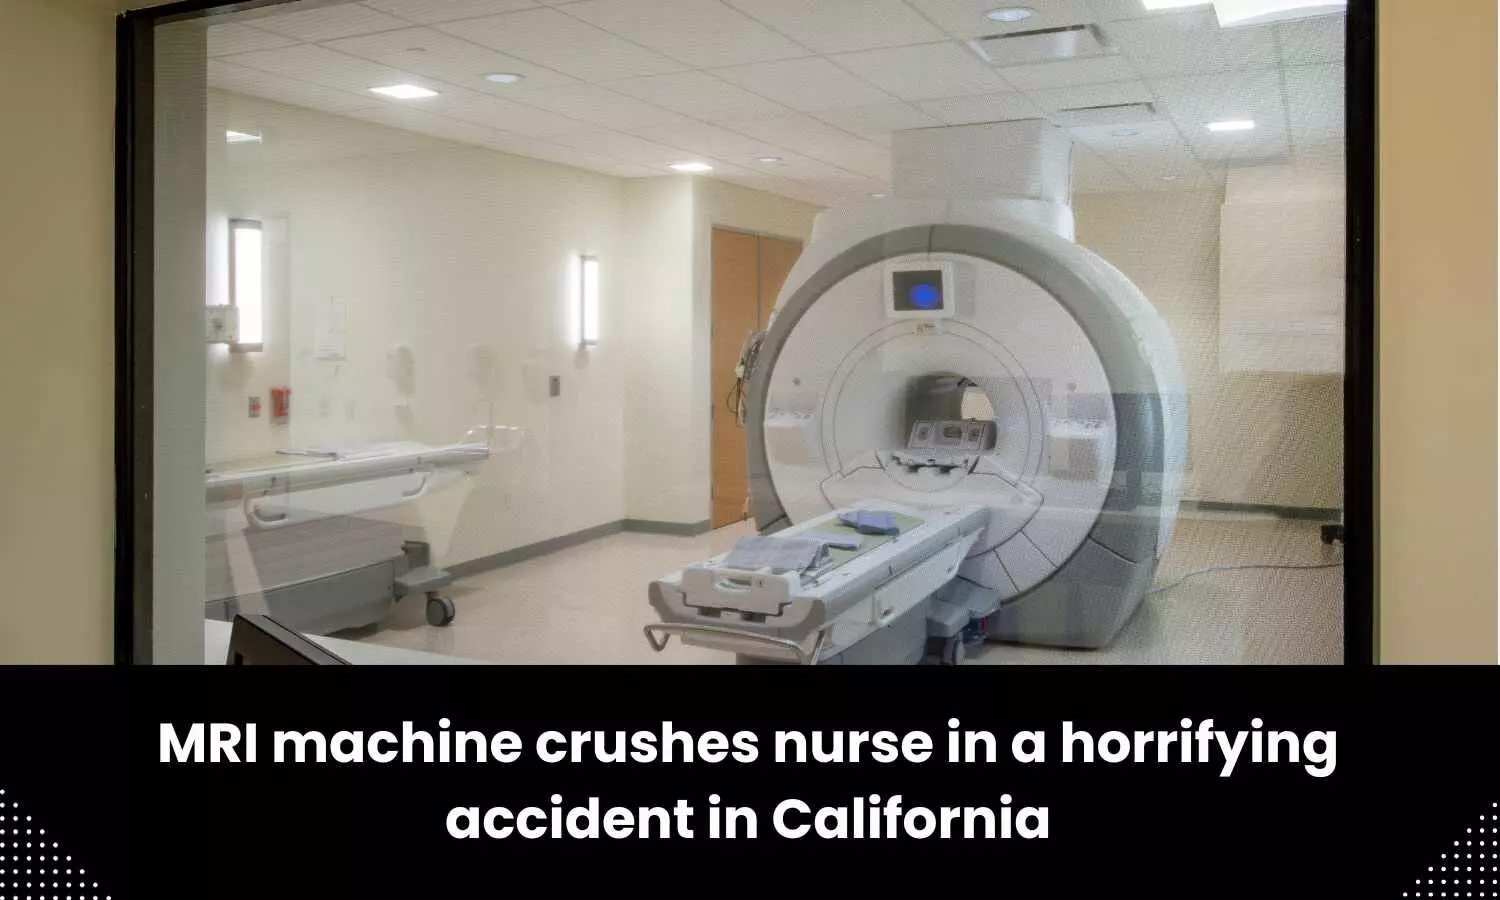 Horrifying accident in California: MRI machine crushes nurse